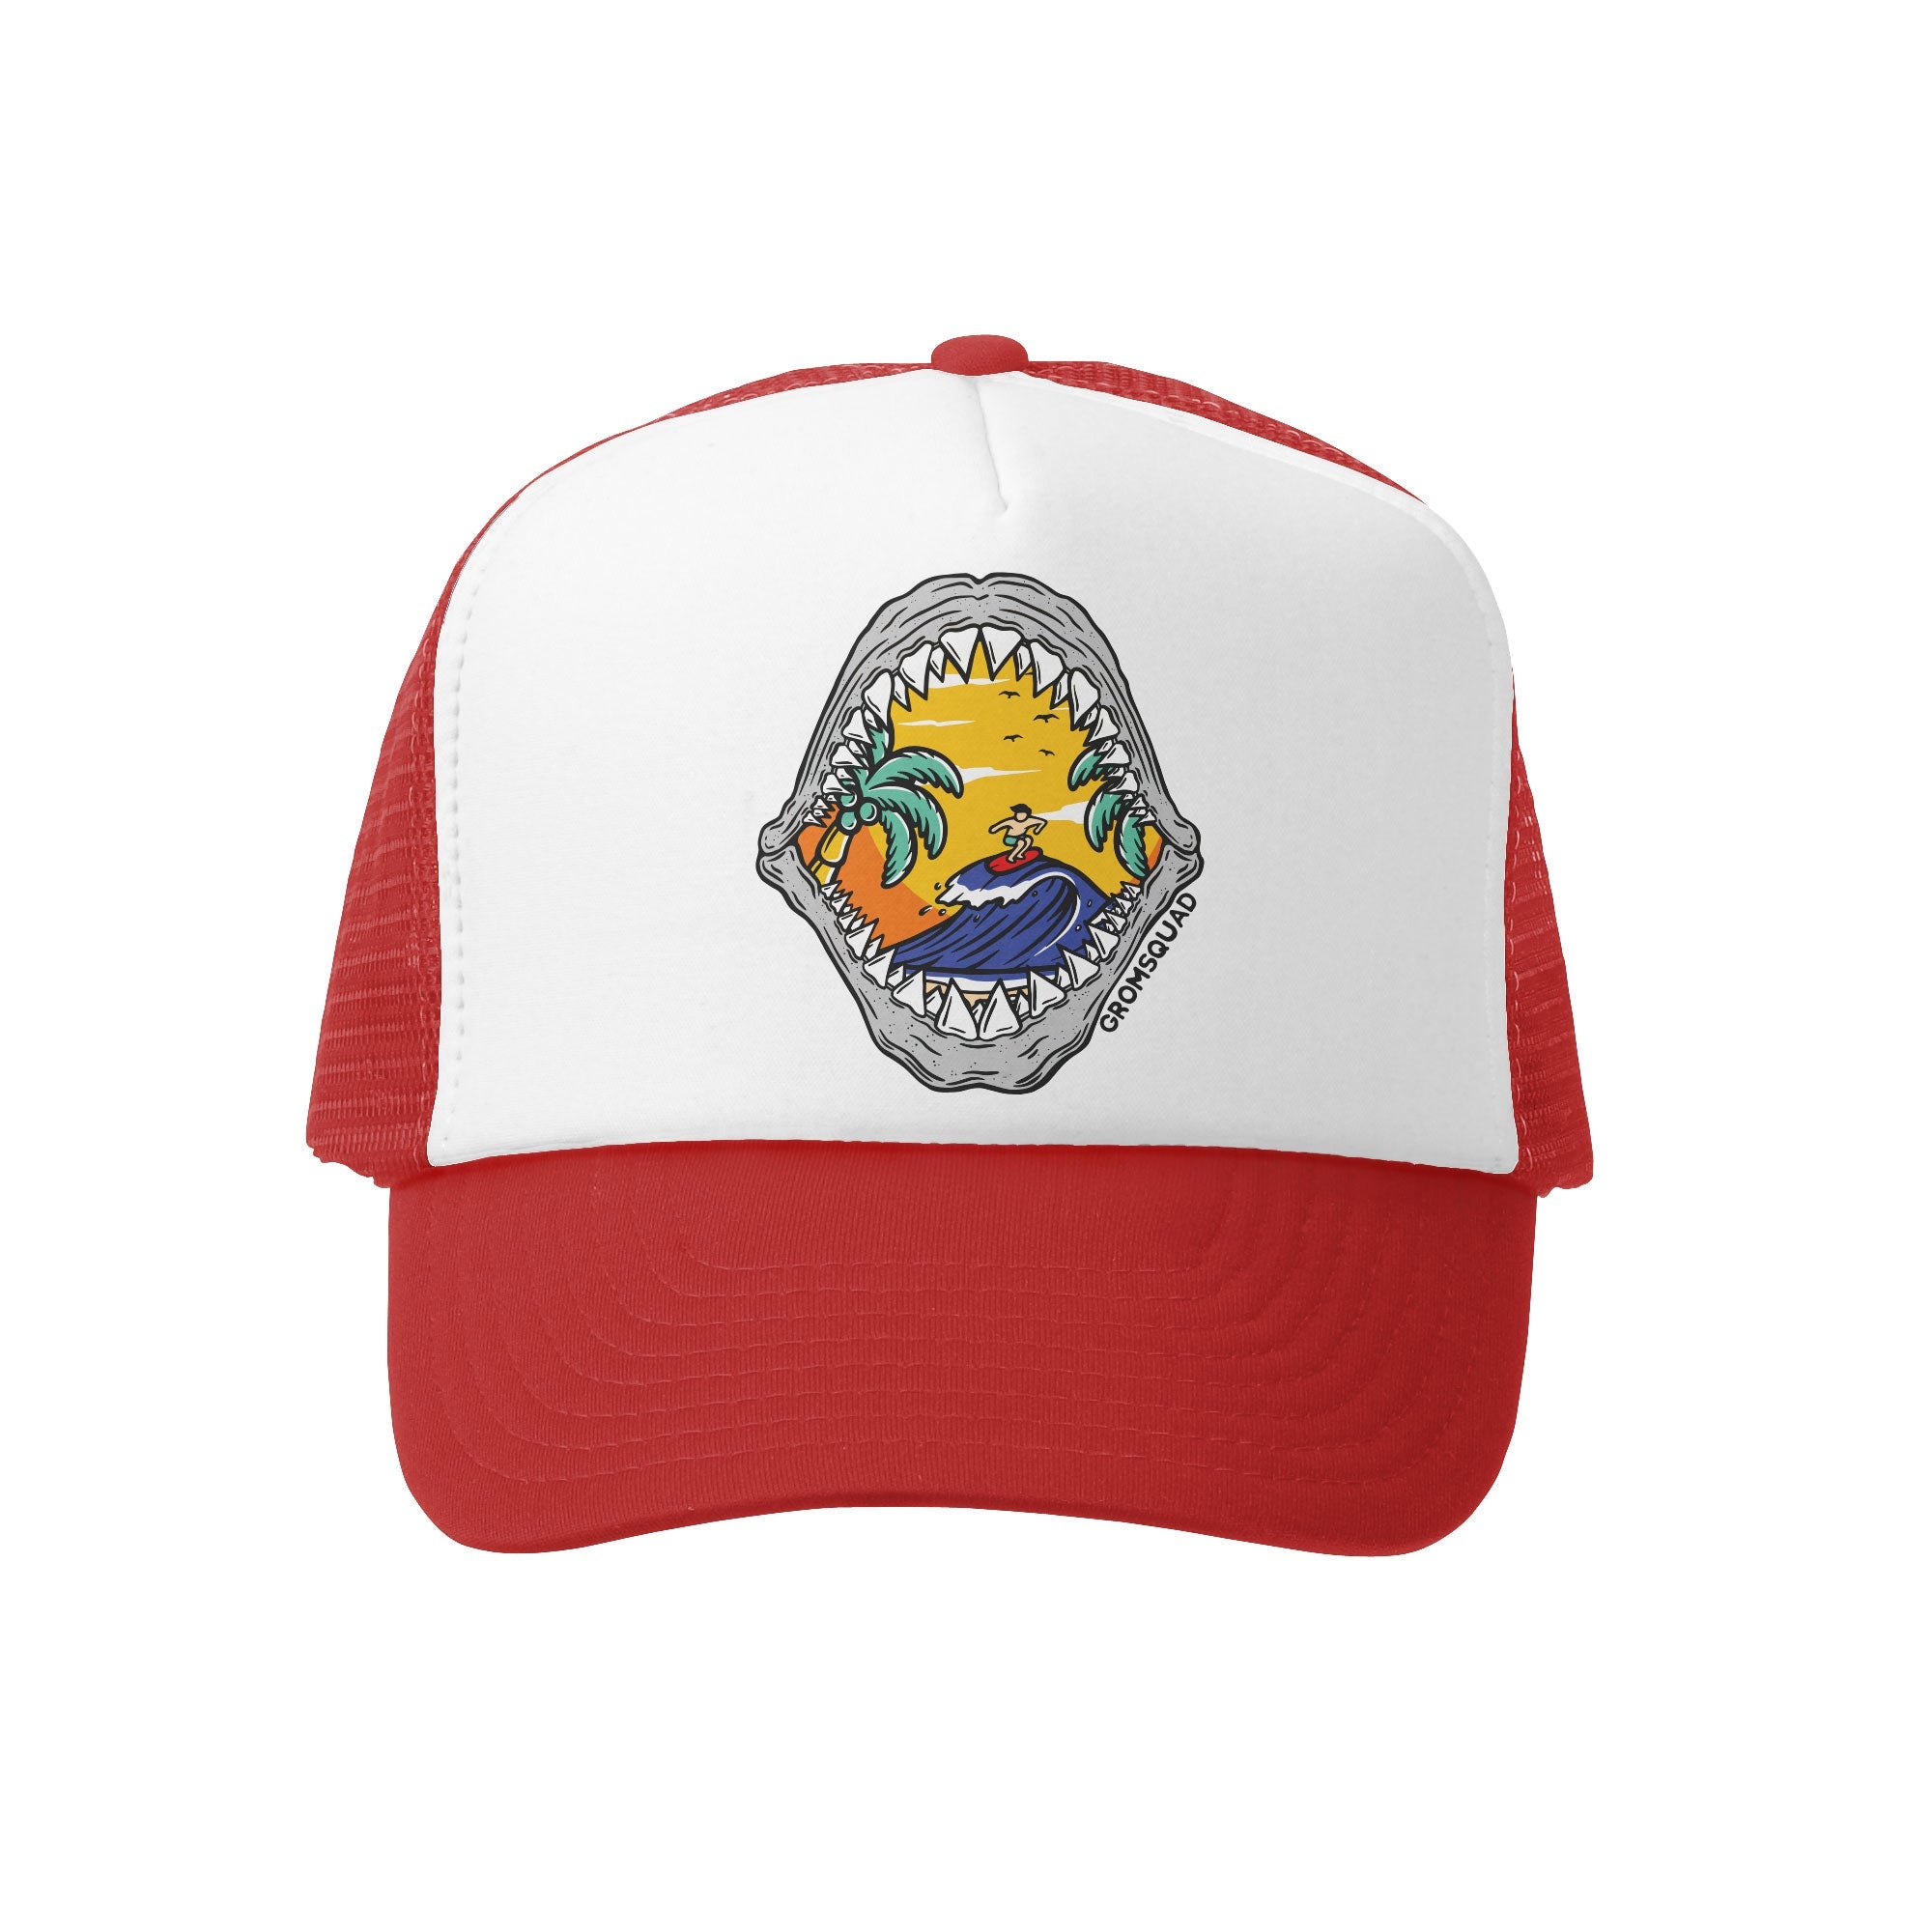 Grom Squad Shark Bite Trucker Hat Red/White Mini